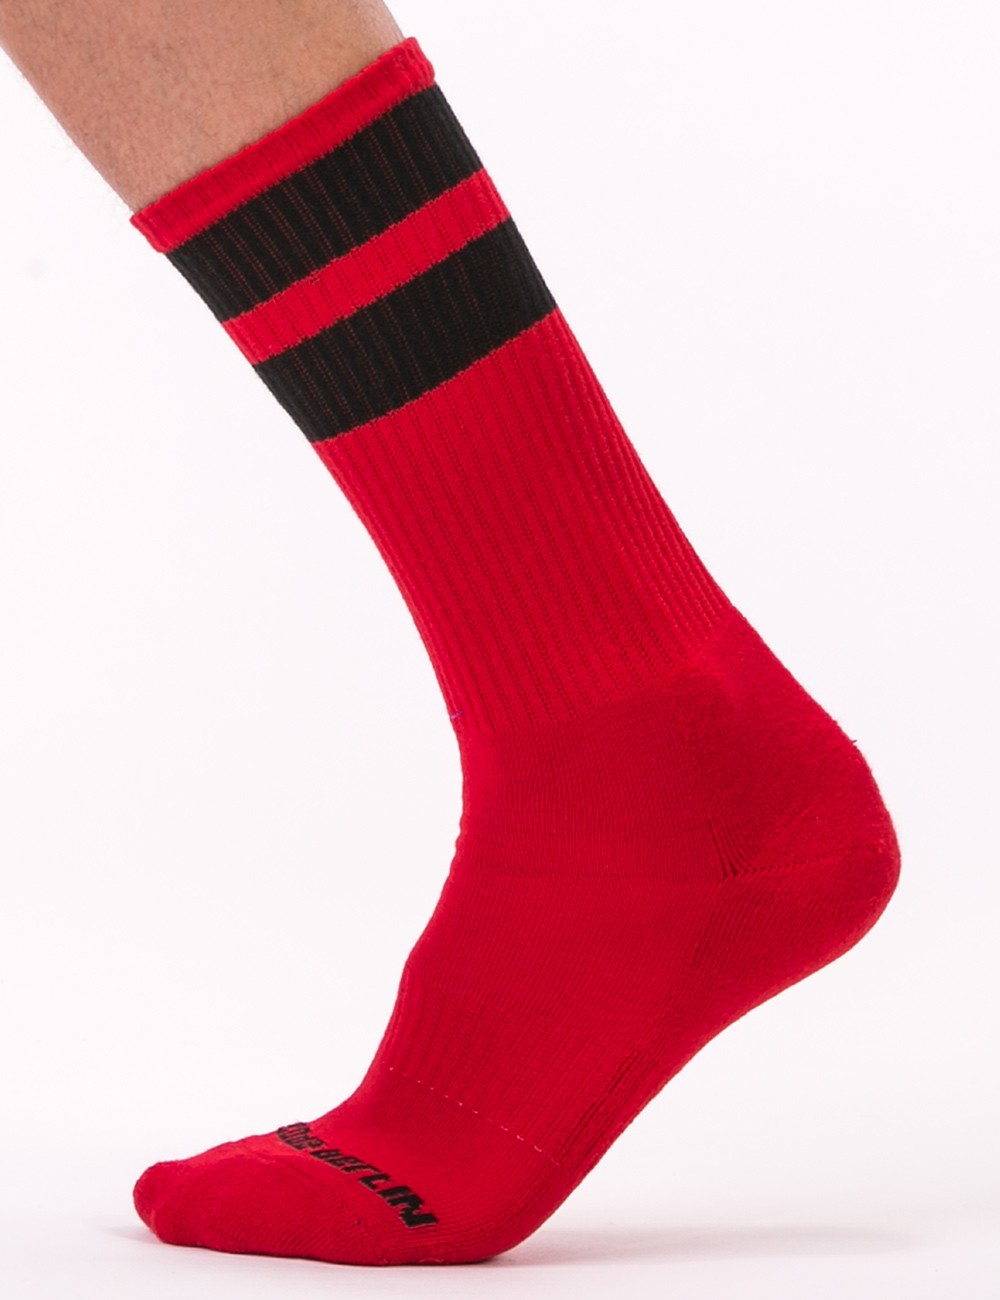 Gym Socks - Red-Black